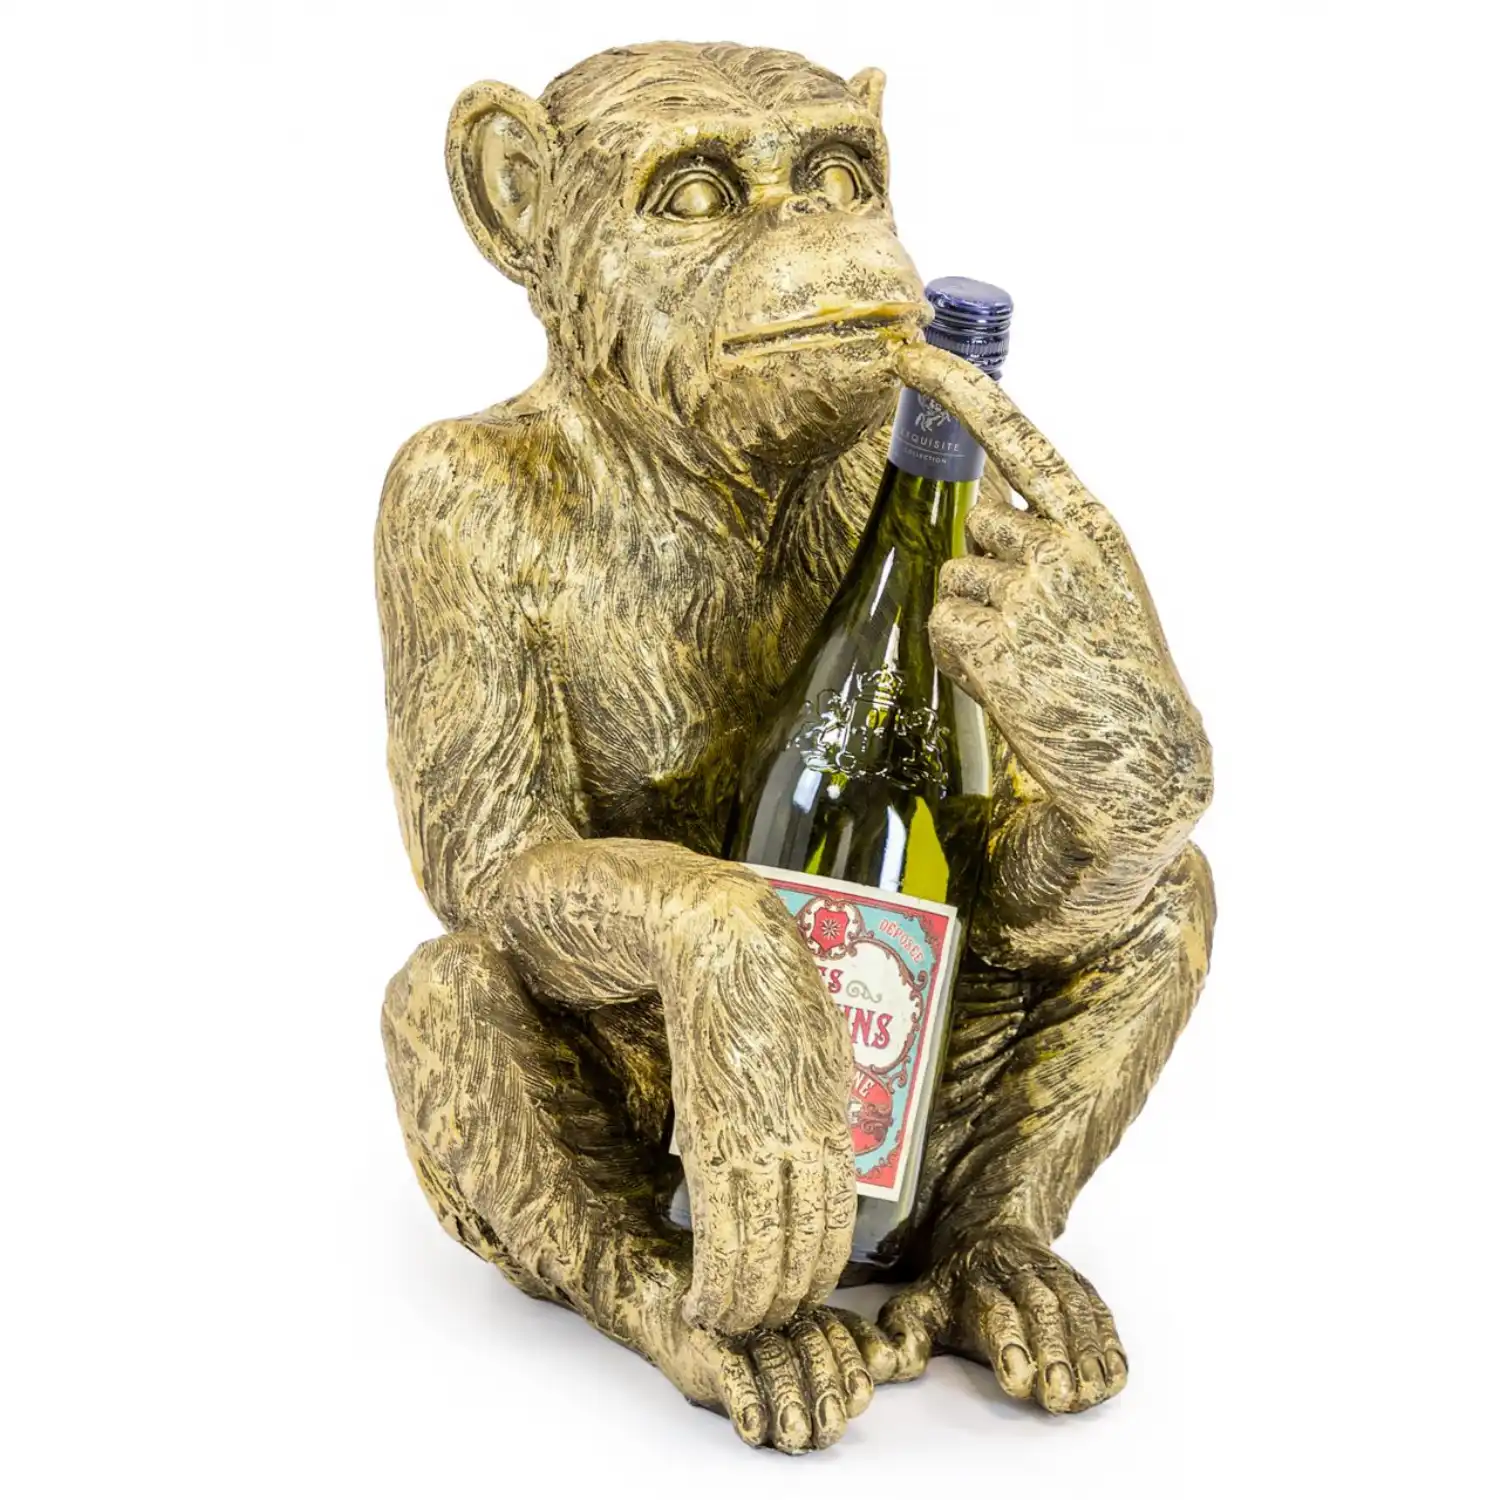 Gold Sitting Monkey Bottle Holder